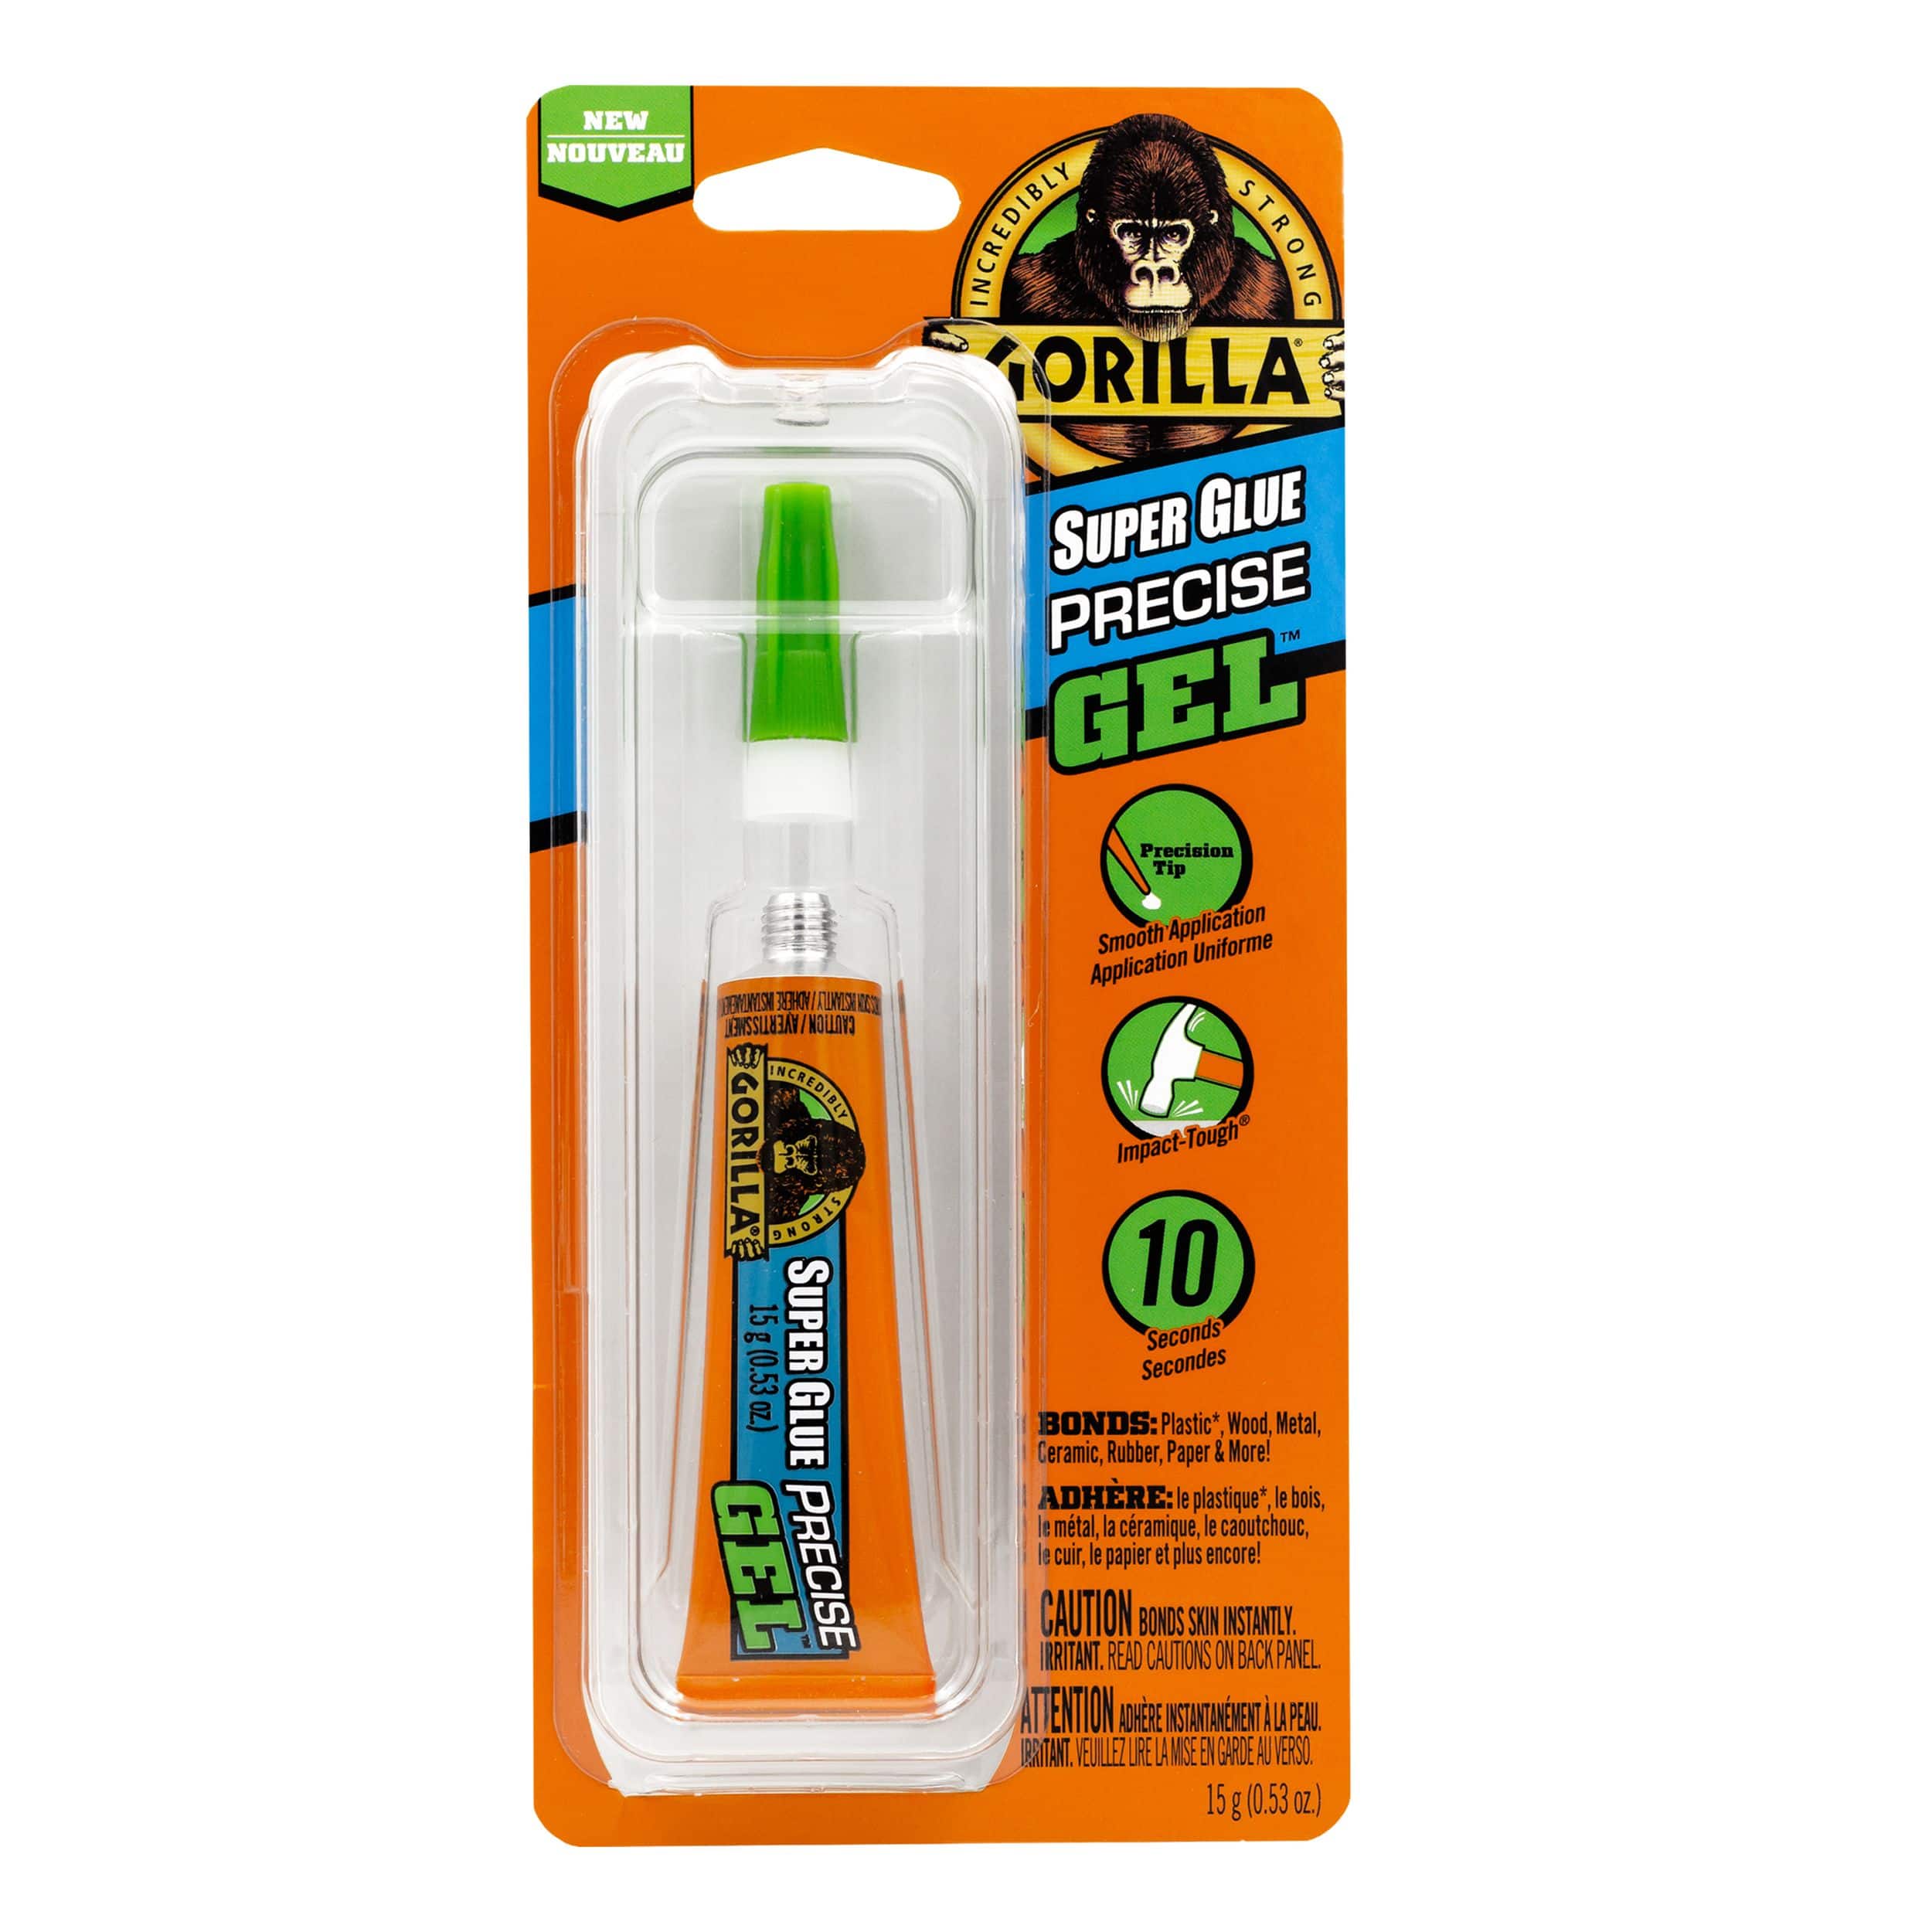 Gorilla Precise Gel Multi-Surface Super Glue Adhesive with Precision Tip,  Clear, 15-g